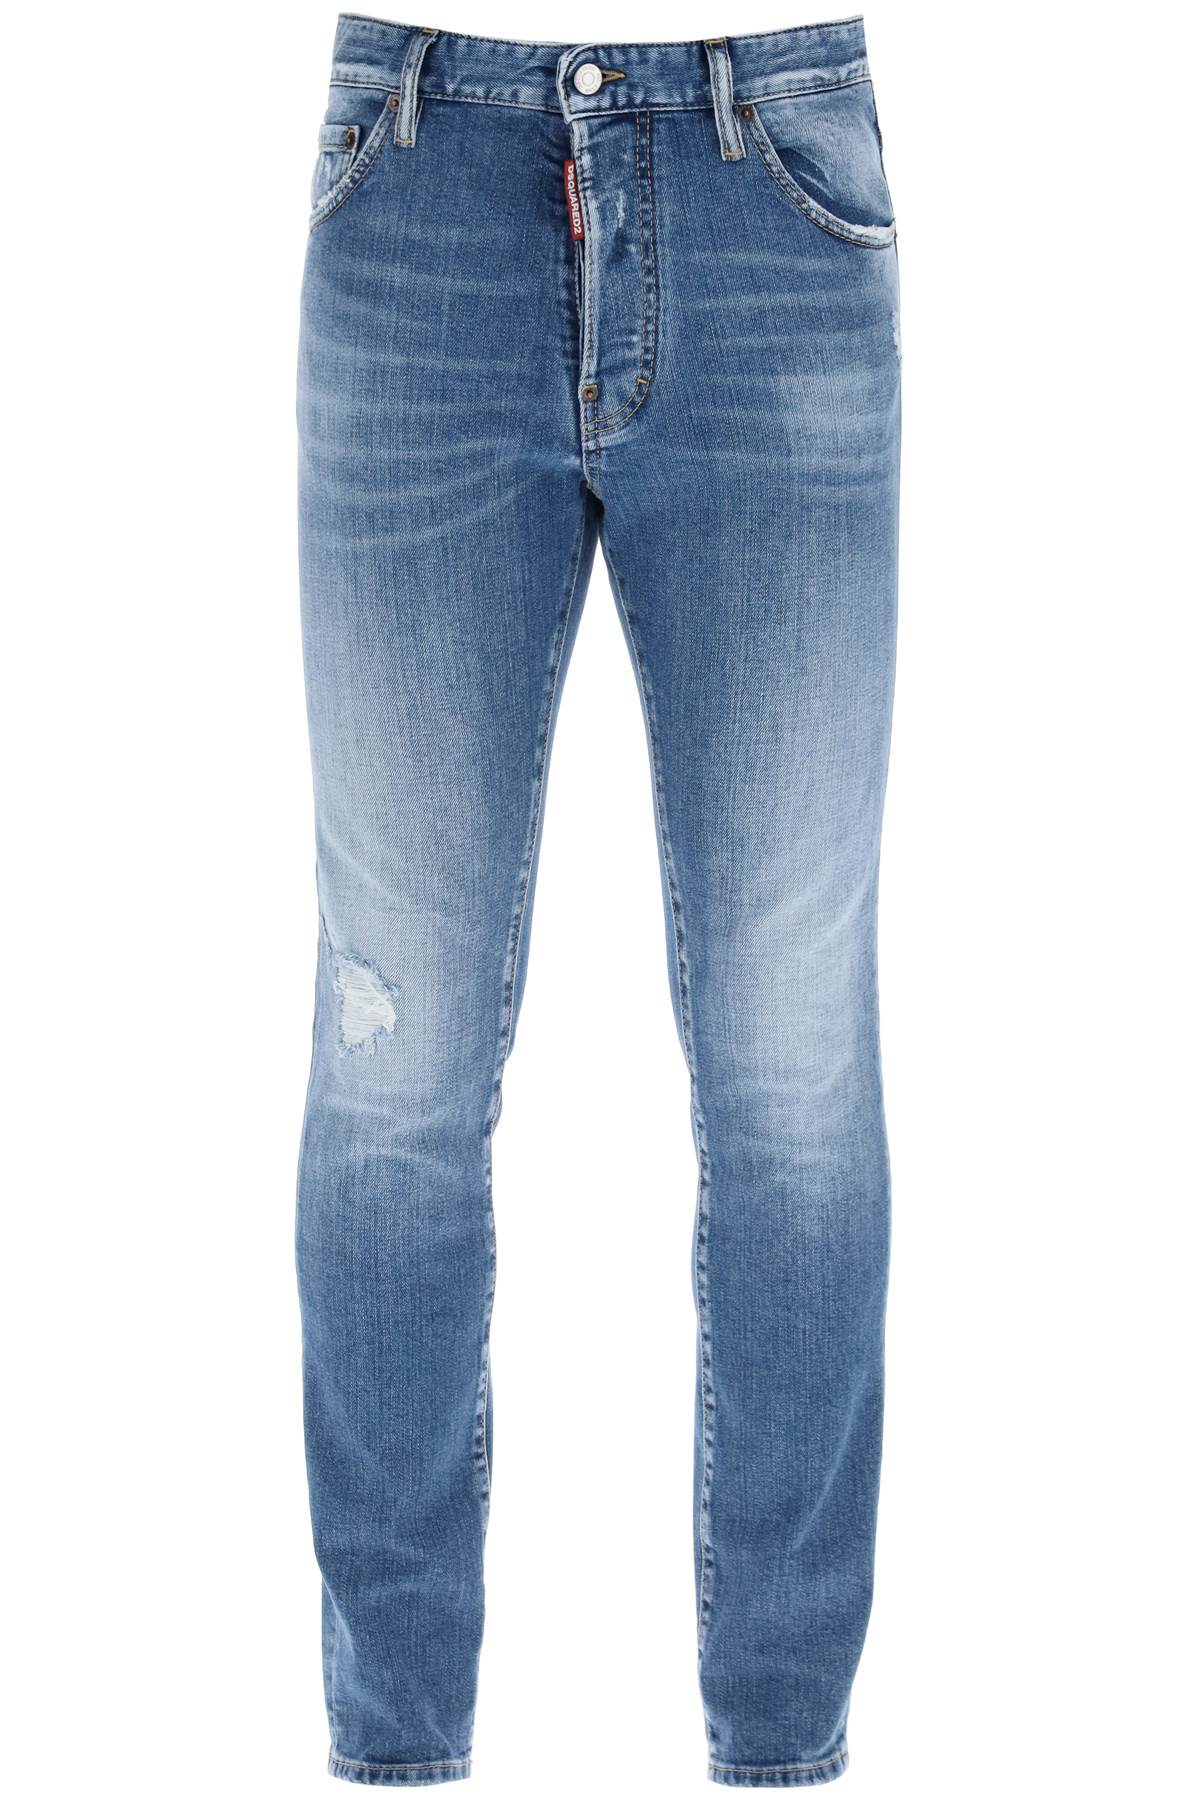 Dsquared2 中型預科生水洗酷男牛仔褲適用於 S71LB1354 S30663 海軍藍